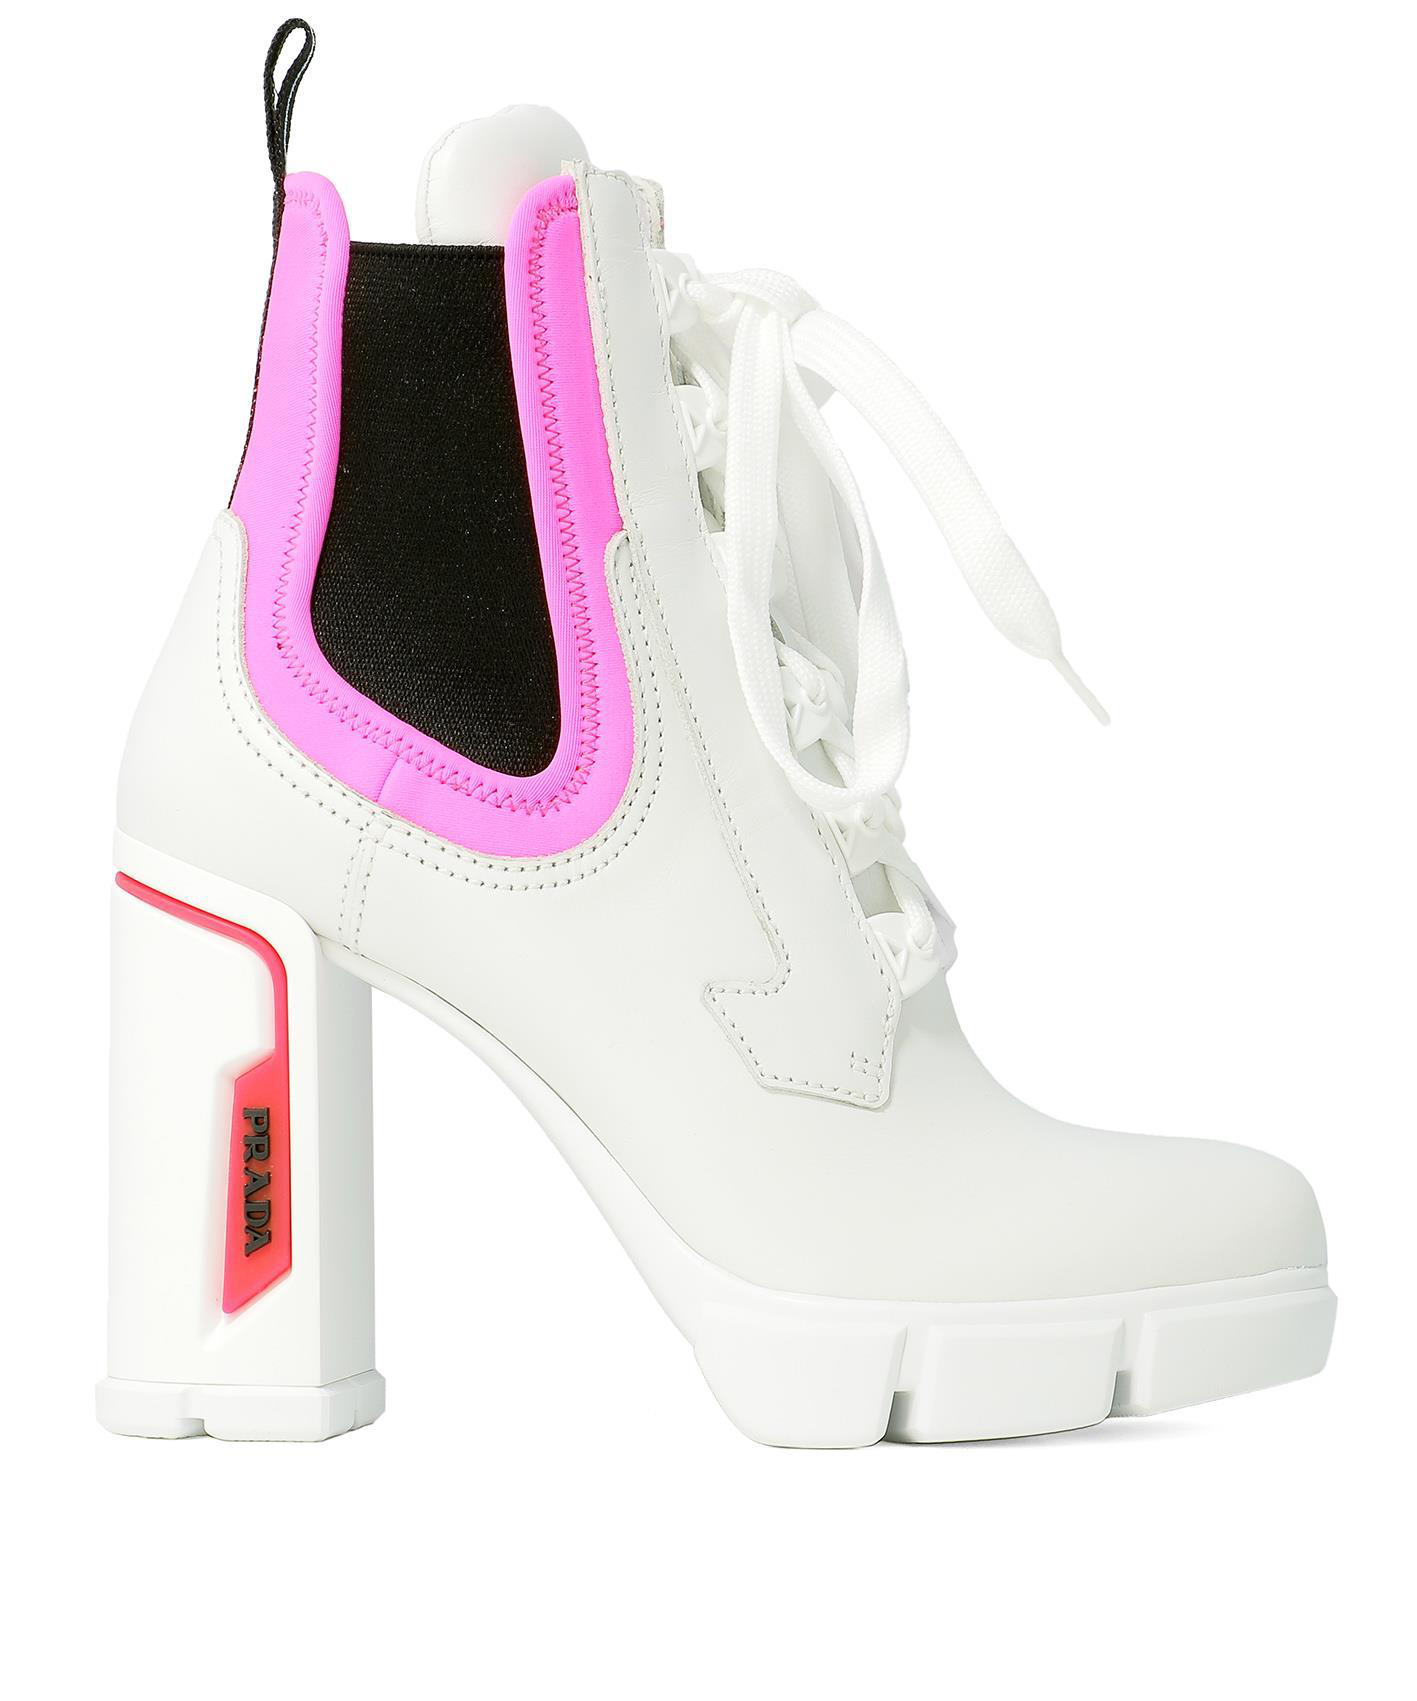 prada white and pink boots, OFF 78%,www.amarkotarim.com.tr